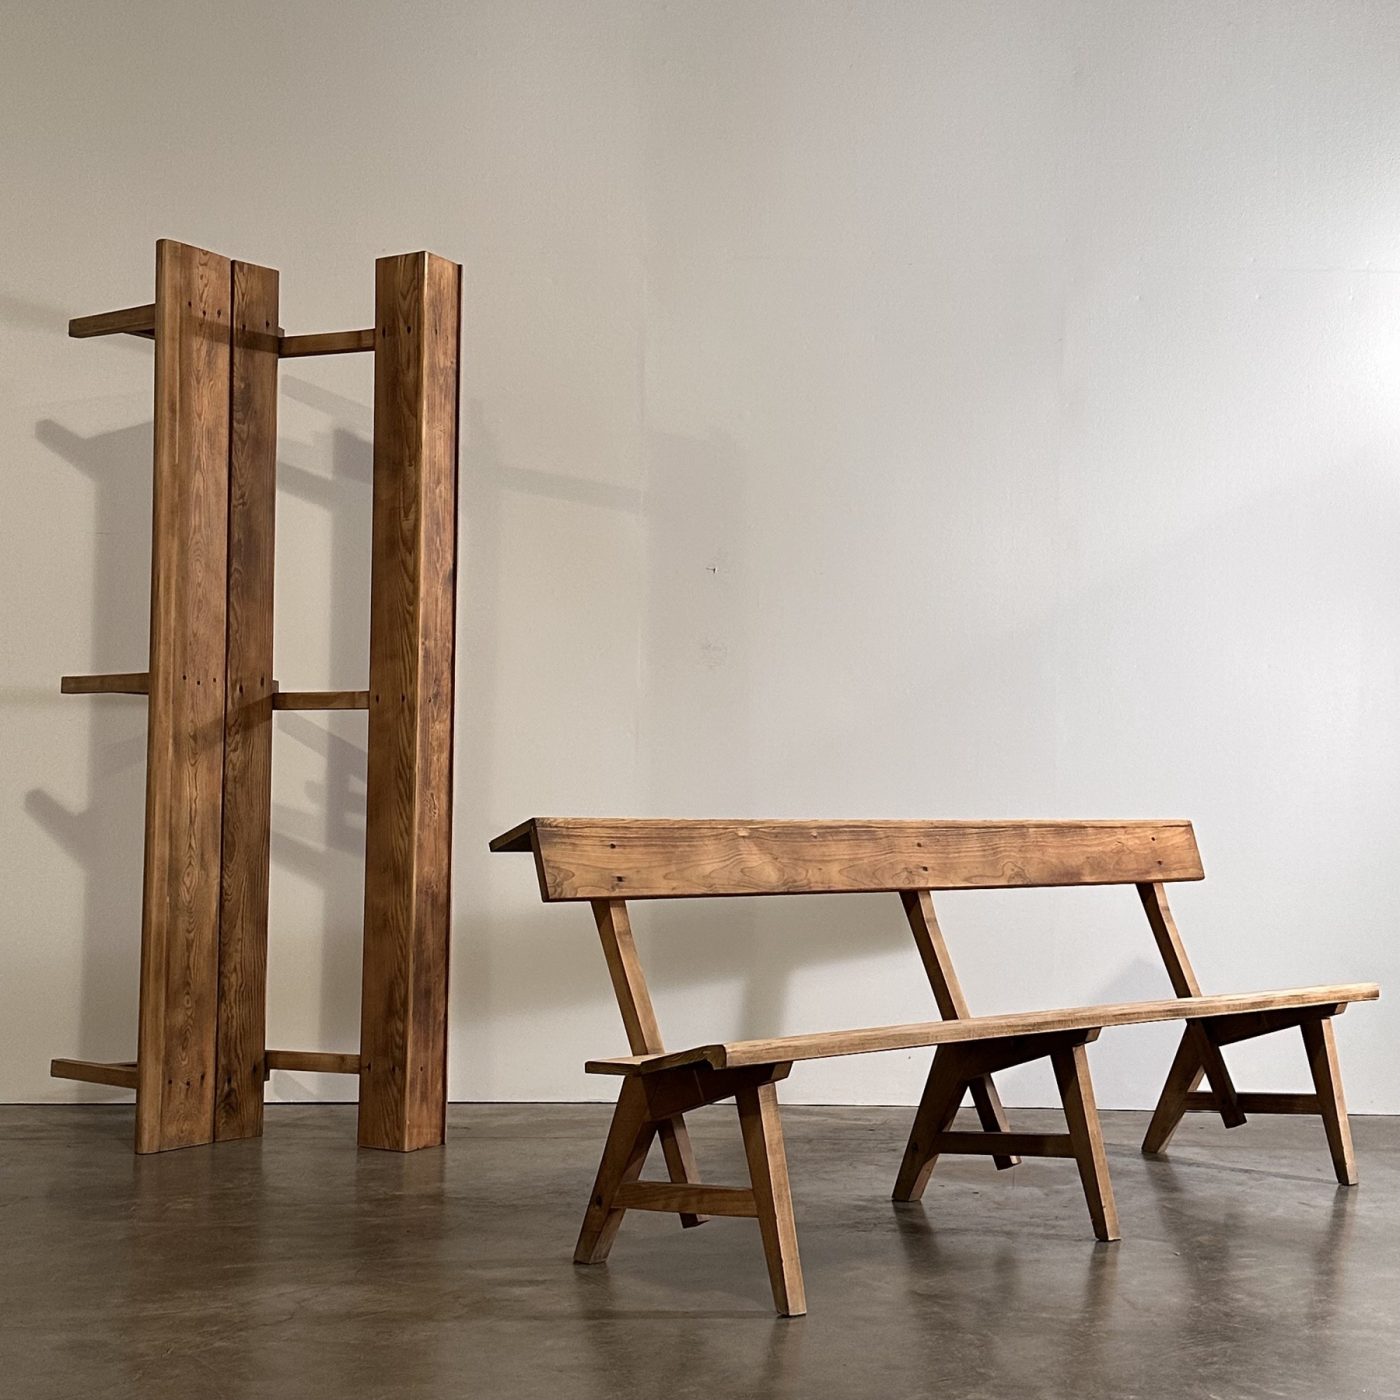 objet-vagabond-wooden-benches0004